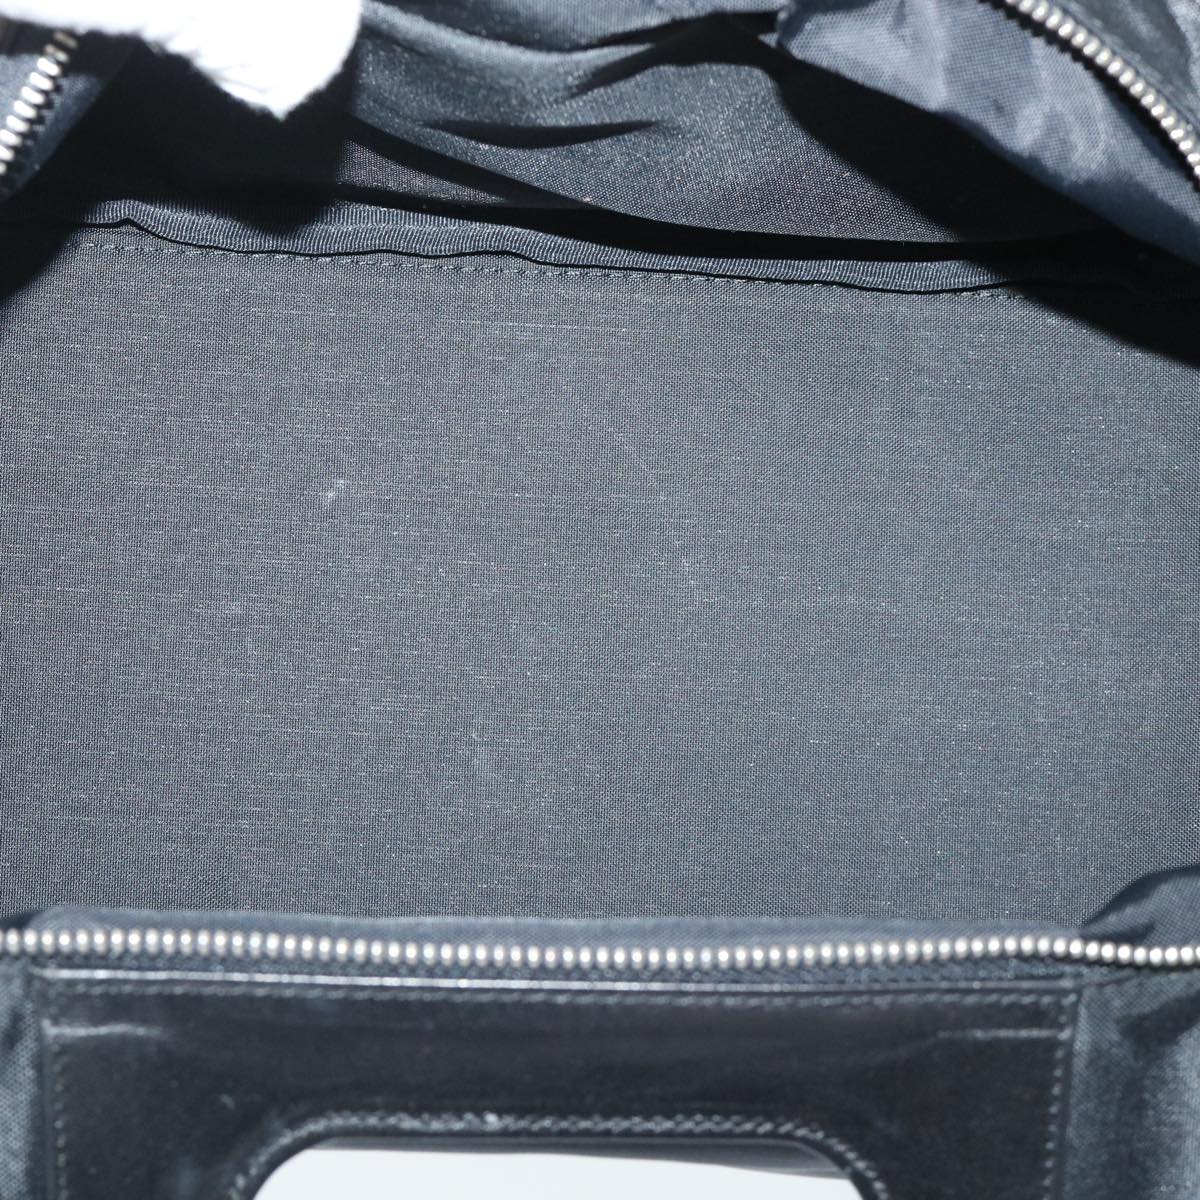 Burberrys Nova Check Blue Label Hand Bag Nylon Black Beige Auth hk826